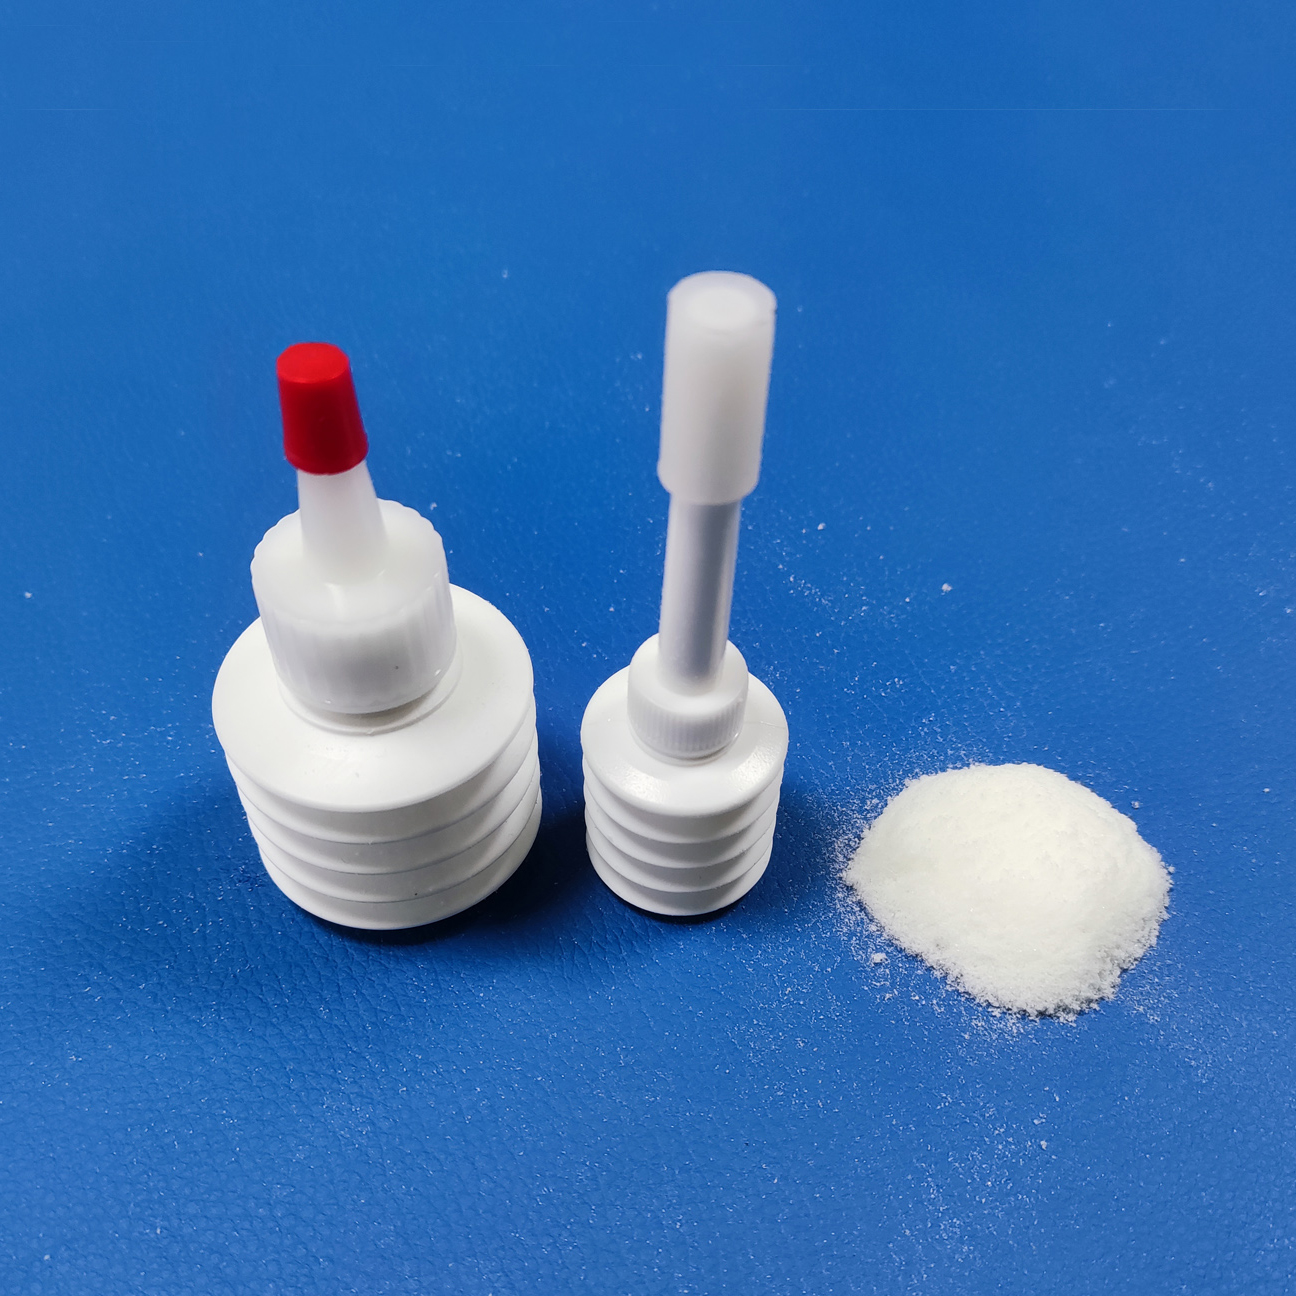 Absorbable Hemostatic Agent Powder